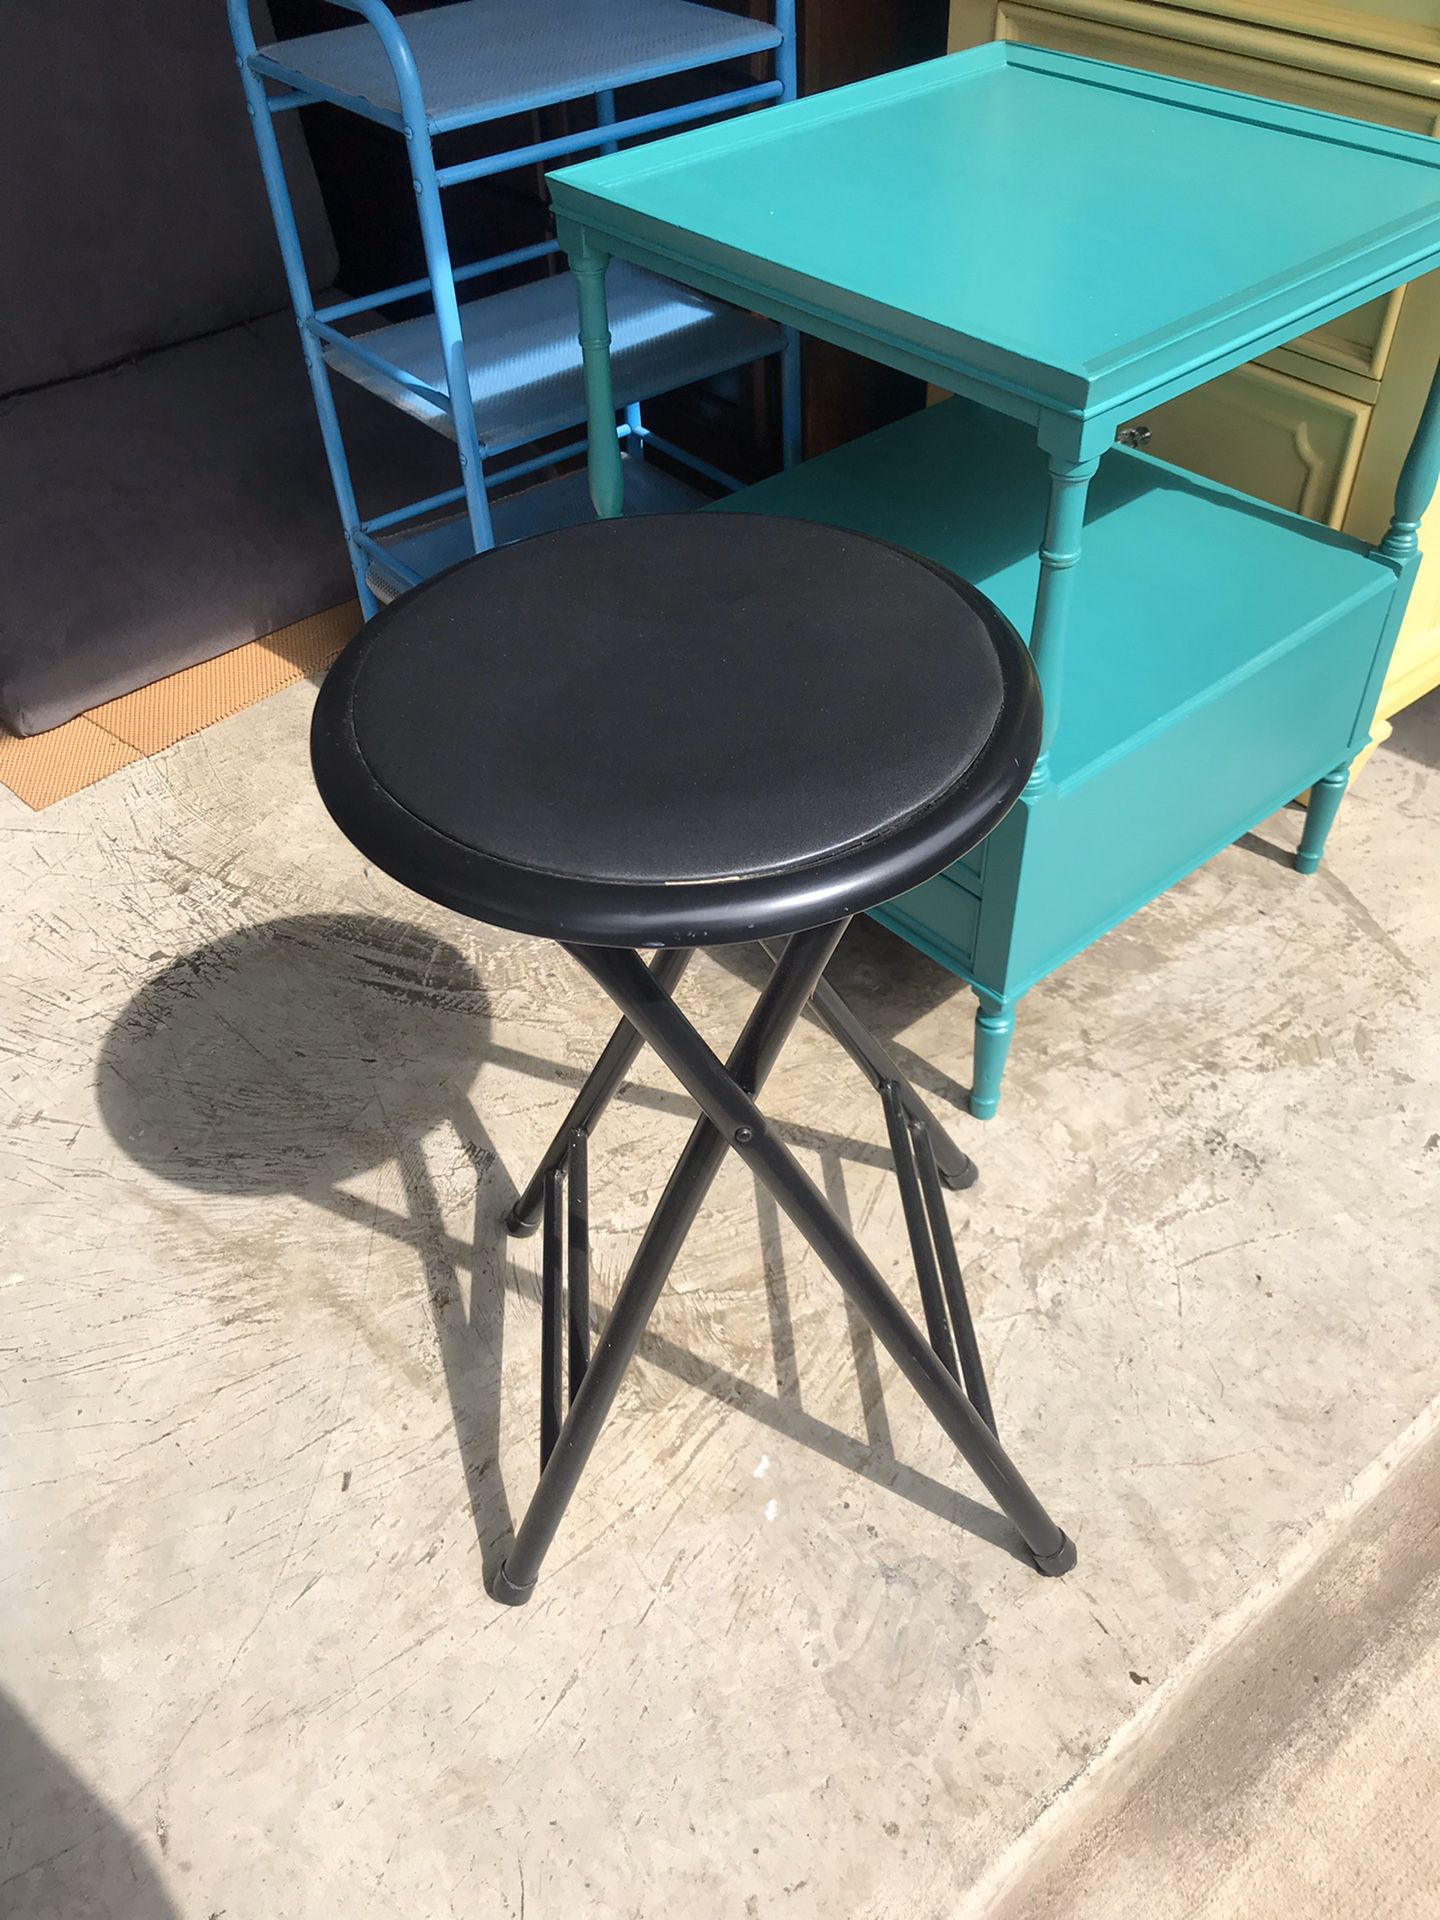 Folding stool or table H24”, 14” diameter